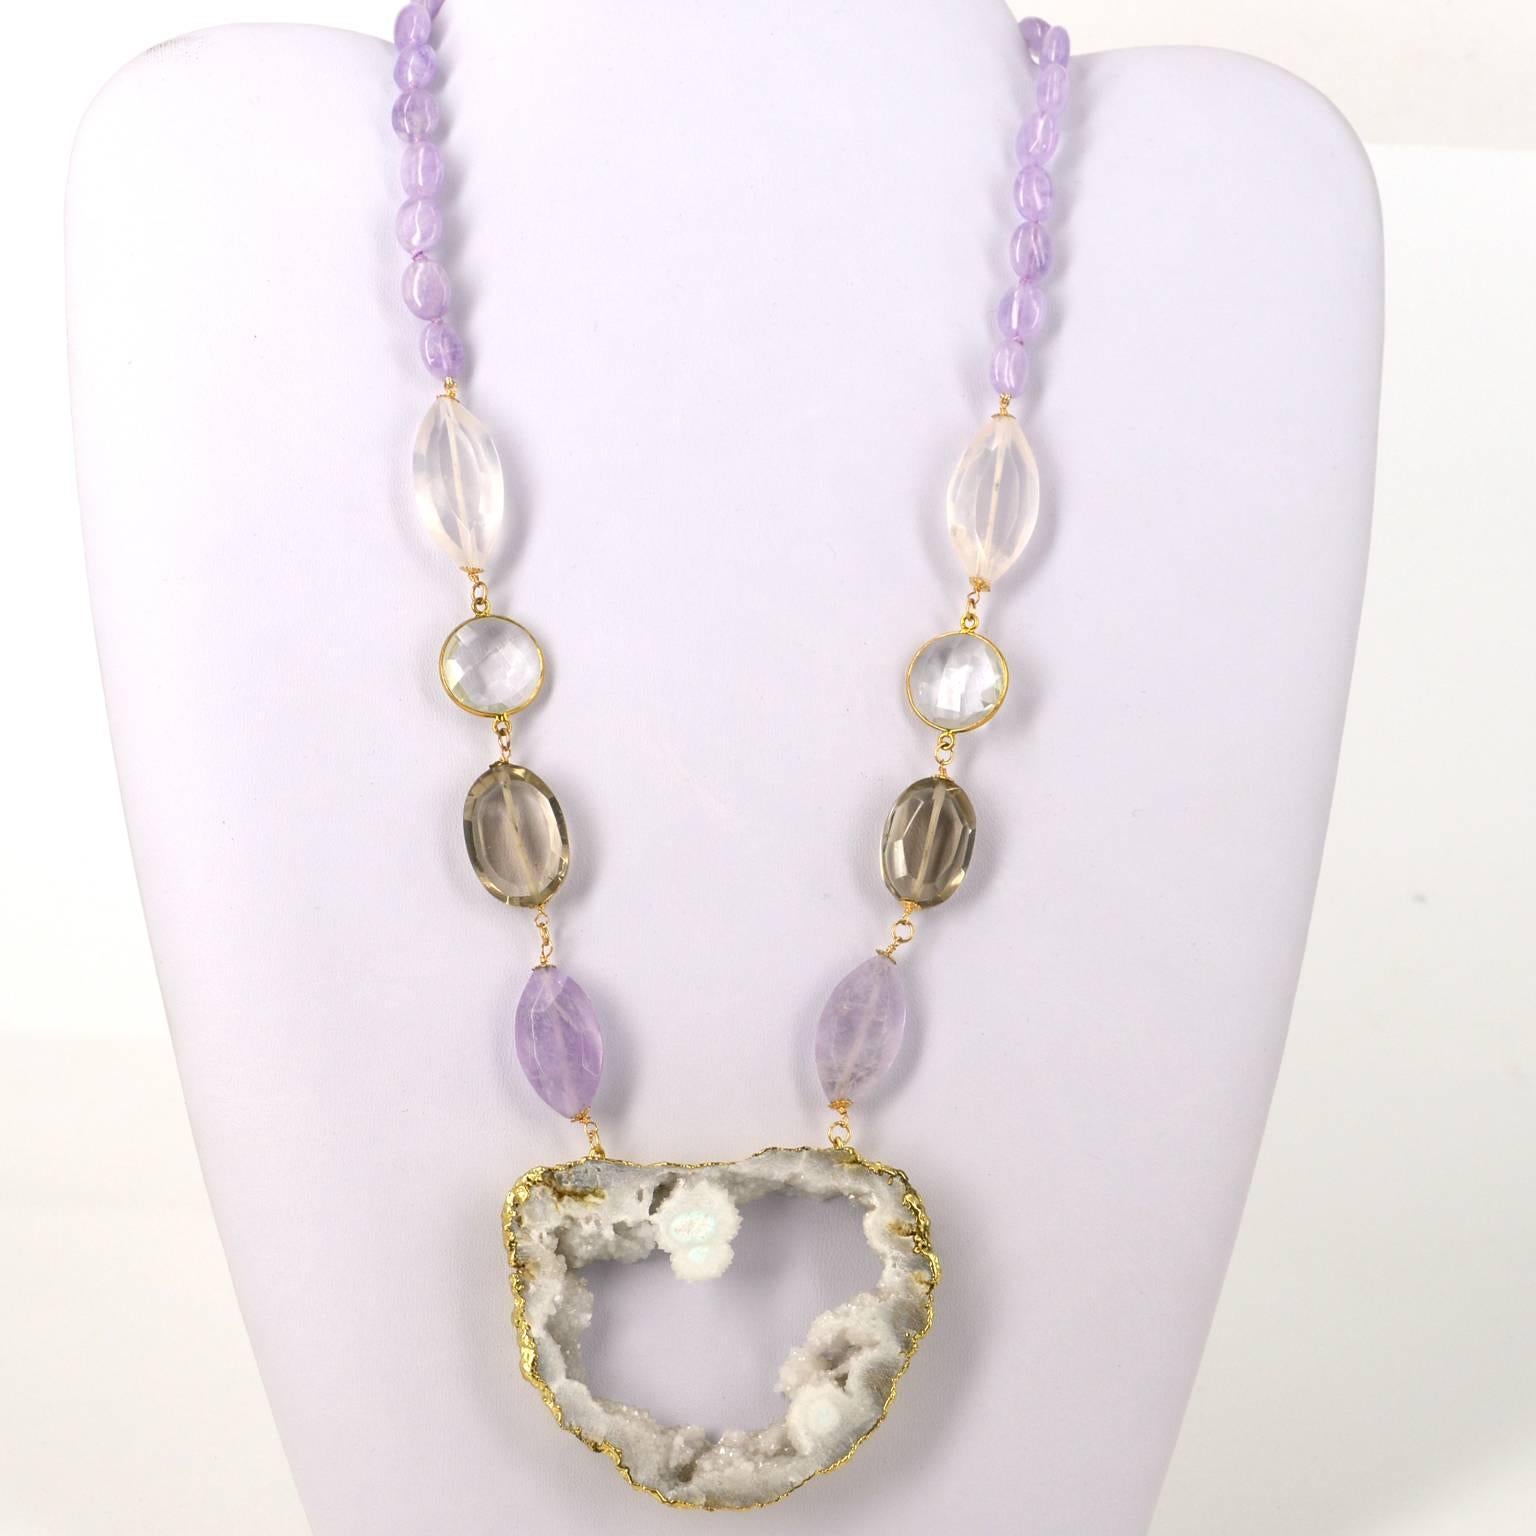 rose quartz and amethyst necklace